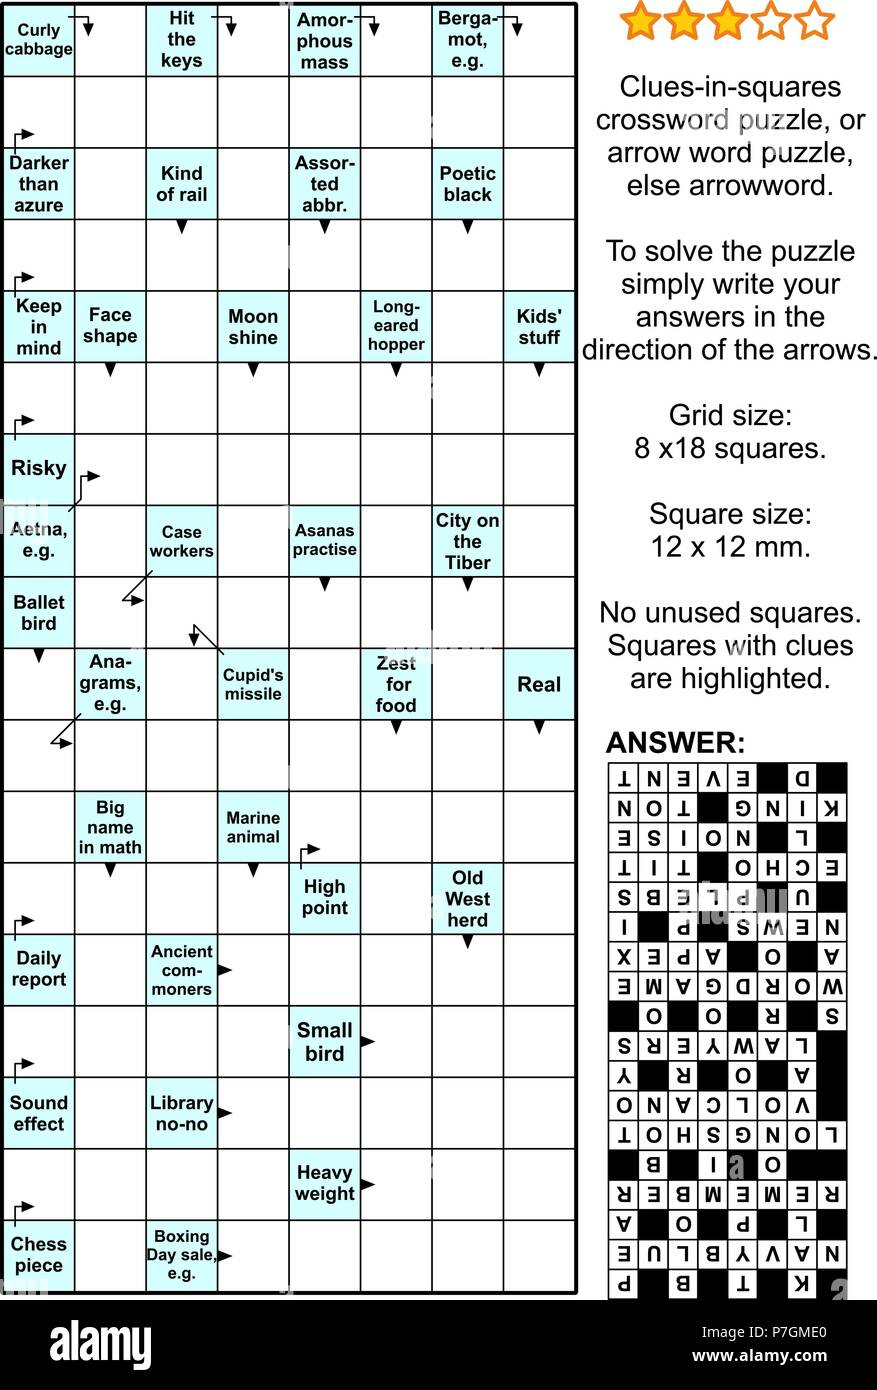 Clues in squares Crossword Puzzle Or Arrow Word Puzzle Else Arrowword 